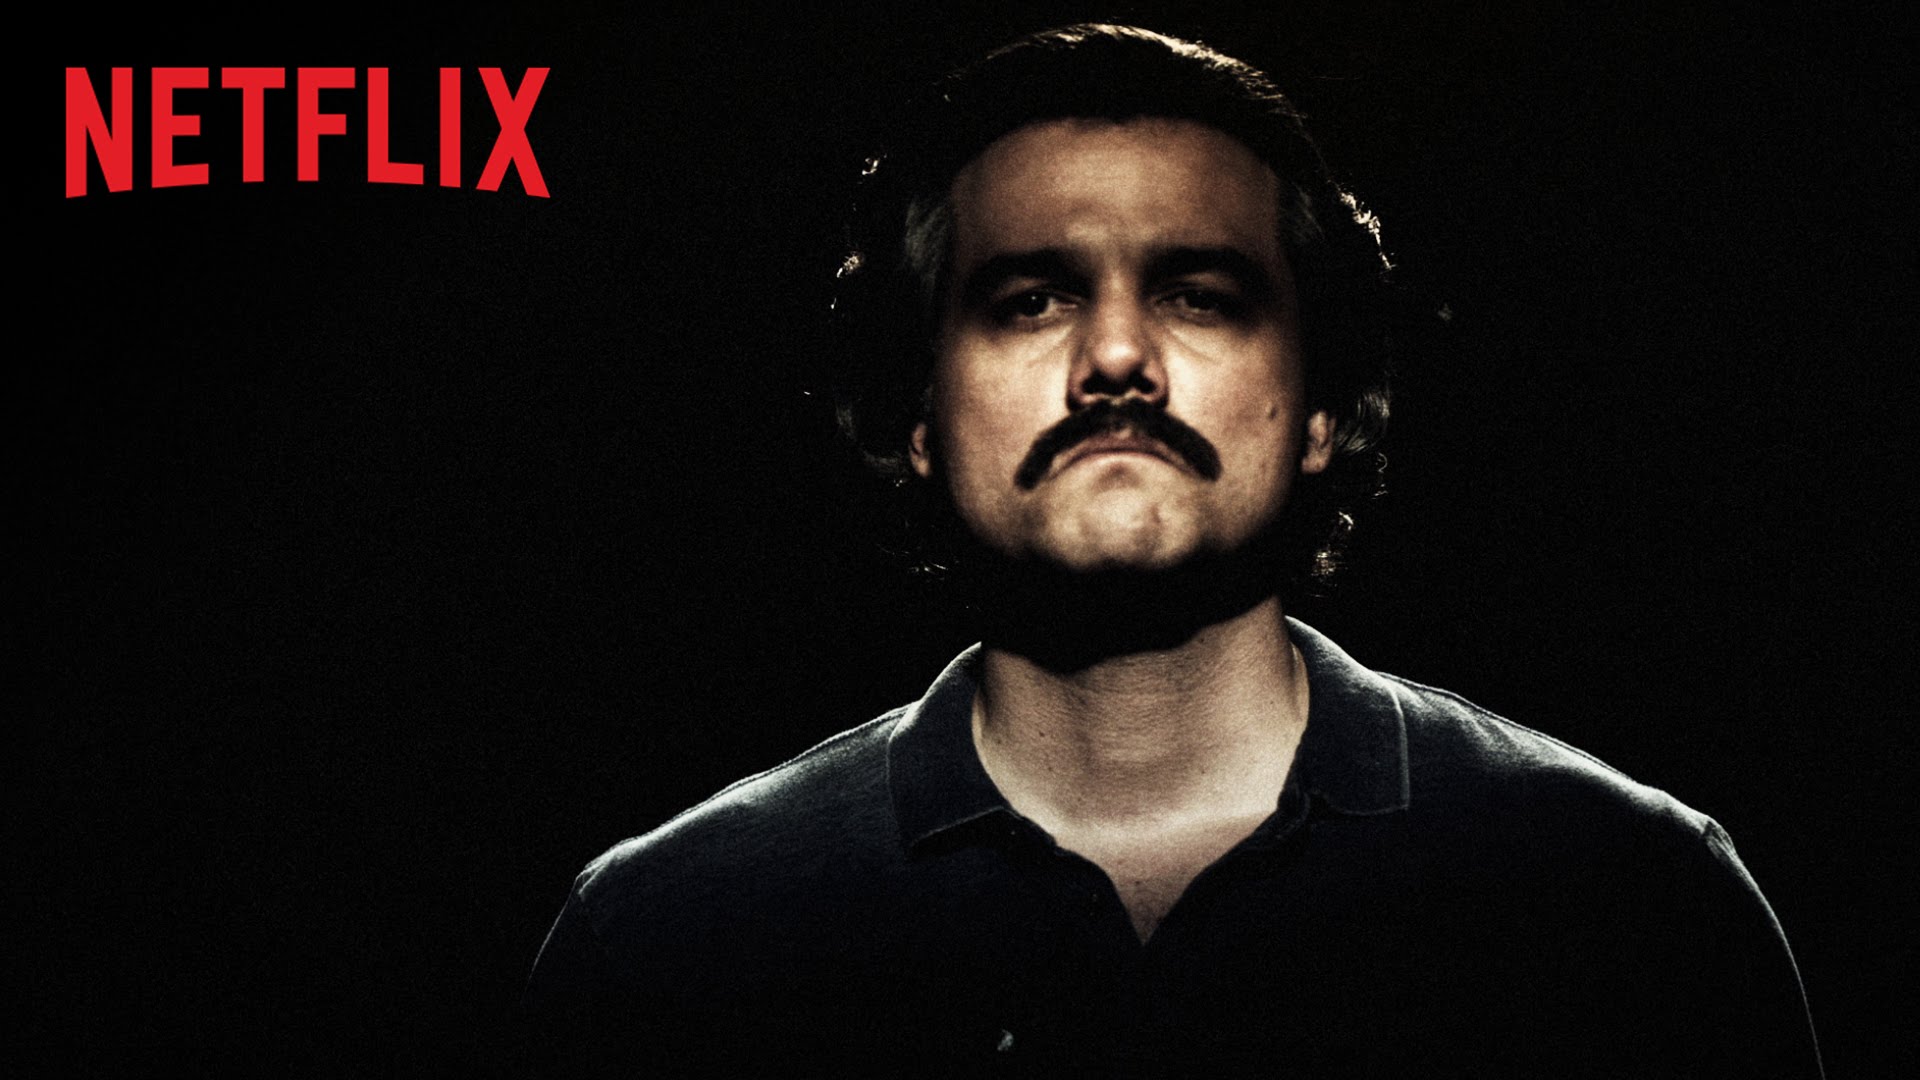 Narcos Season 2 is Now on Netflix